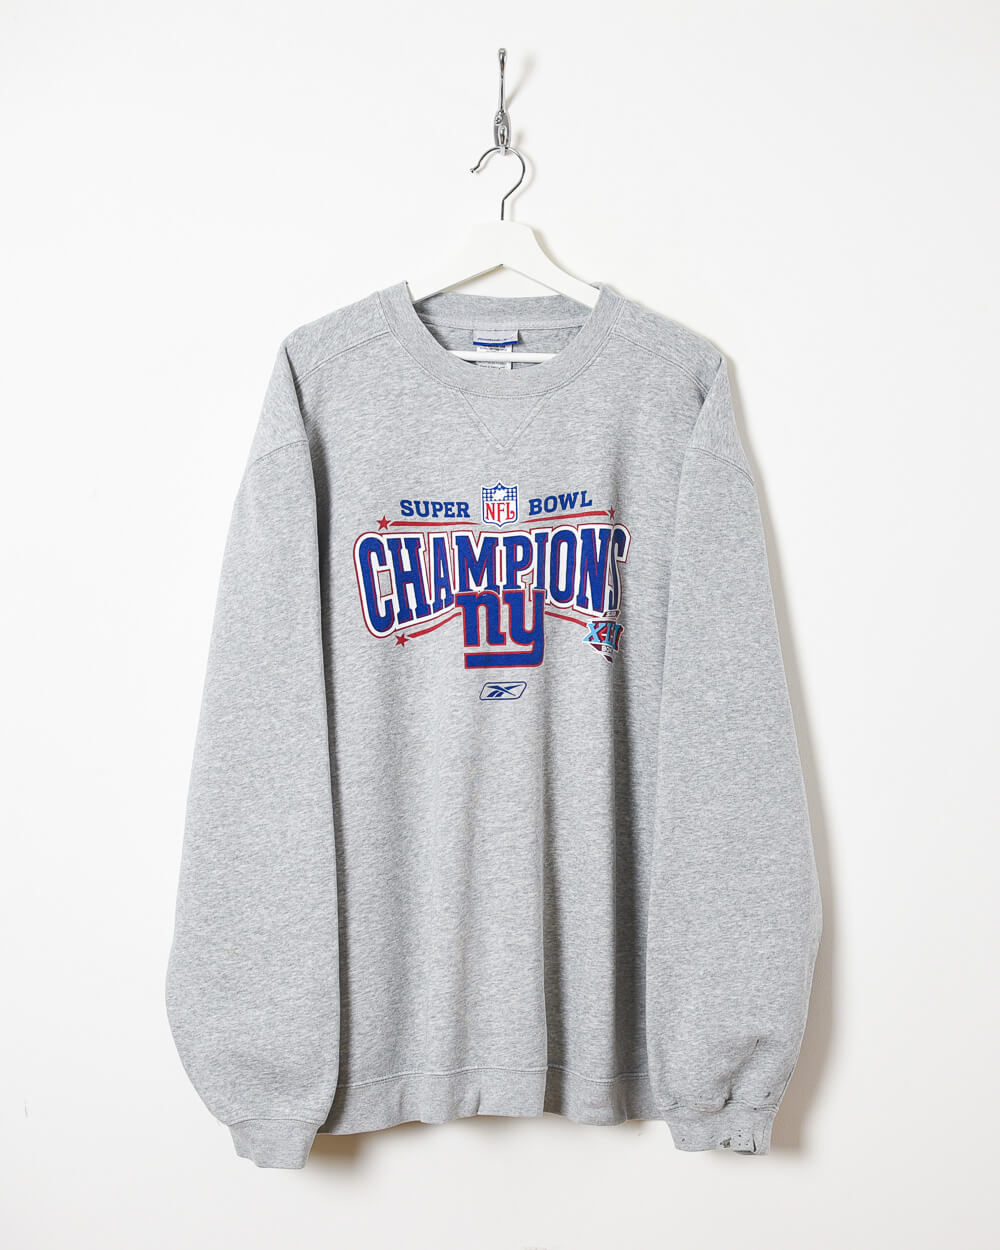 Reebok NFL NY Giants Super Bowl Champions Sweatshirt - XX-Large - Domno Vintage 90s, 80s, 00s Retro and Vintage Clothing 